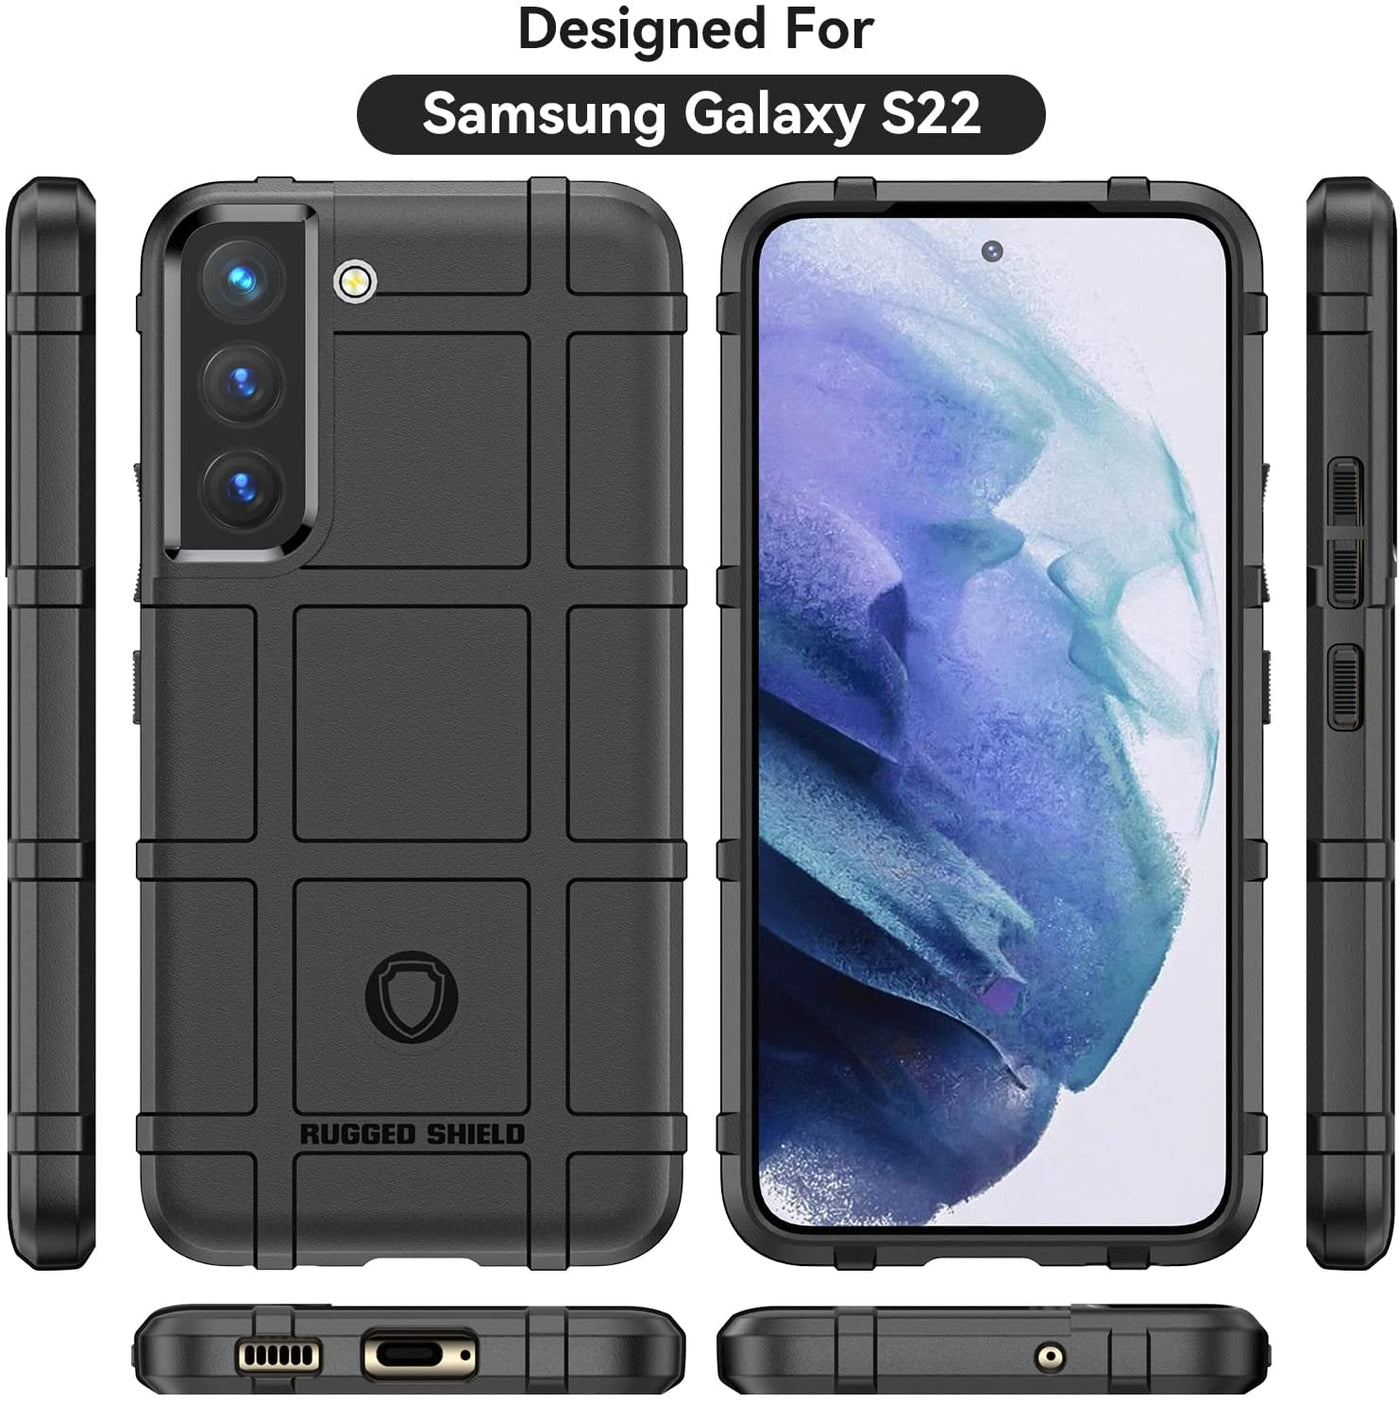 Samsung Galaxy S22 high quality premium and unique designer case cover